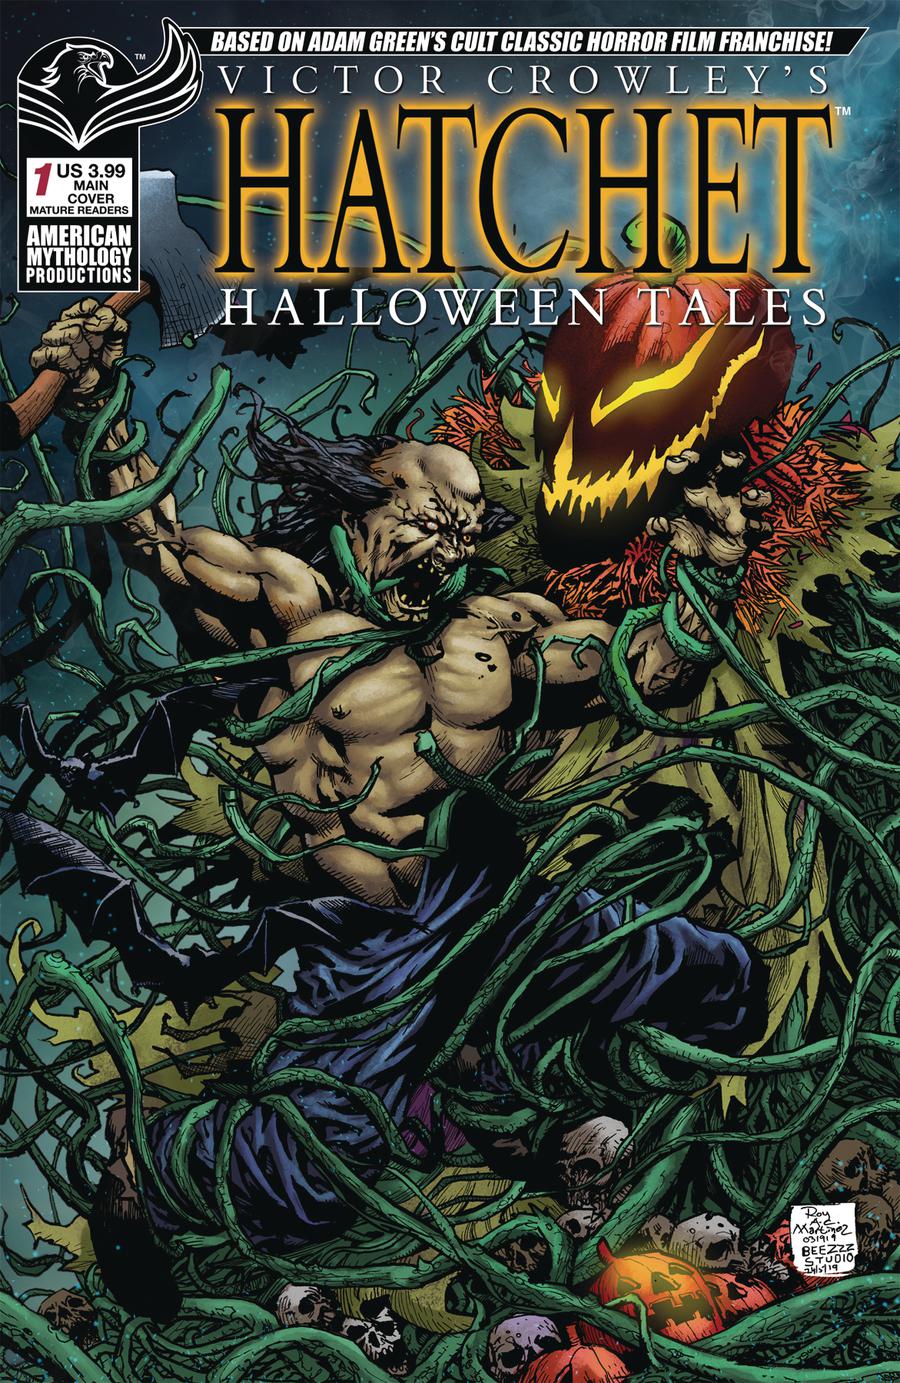 Victor Crowleys Hatchet Halloween Tales #1 Cover A Regular Roy Allan Martinez Cover